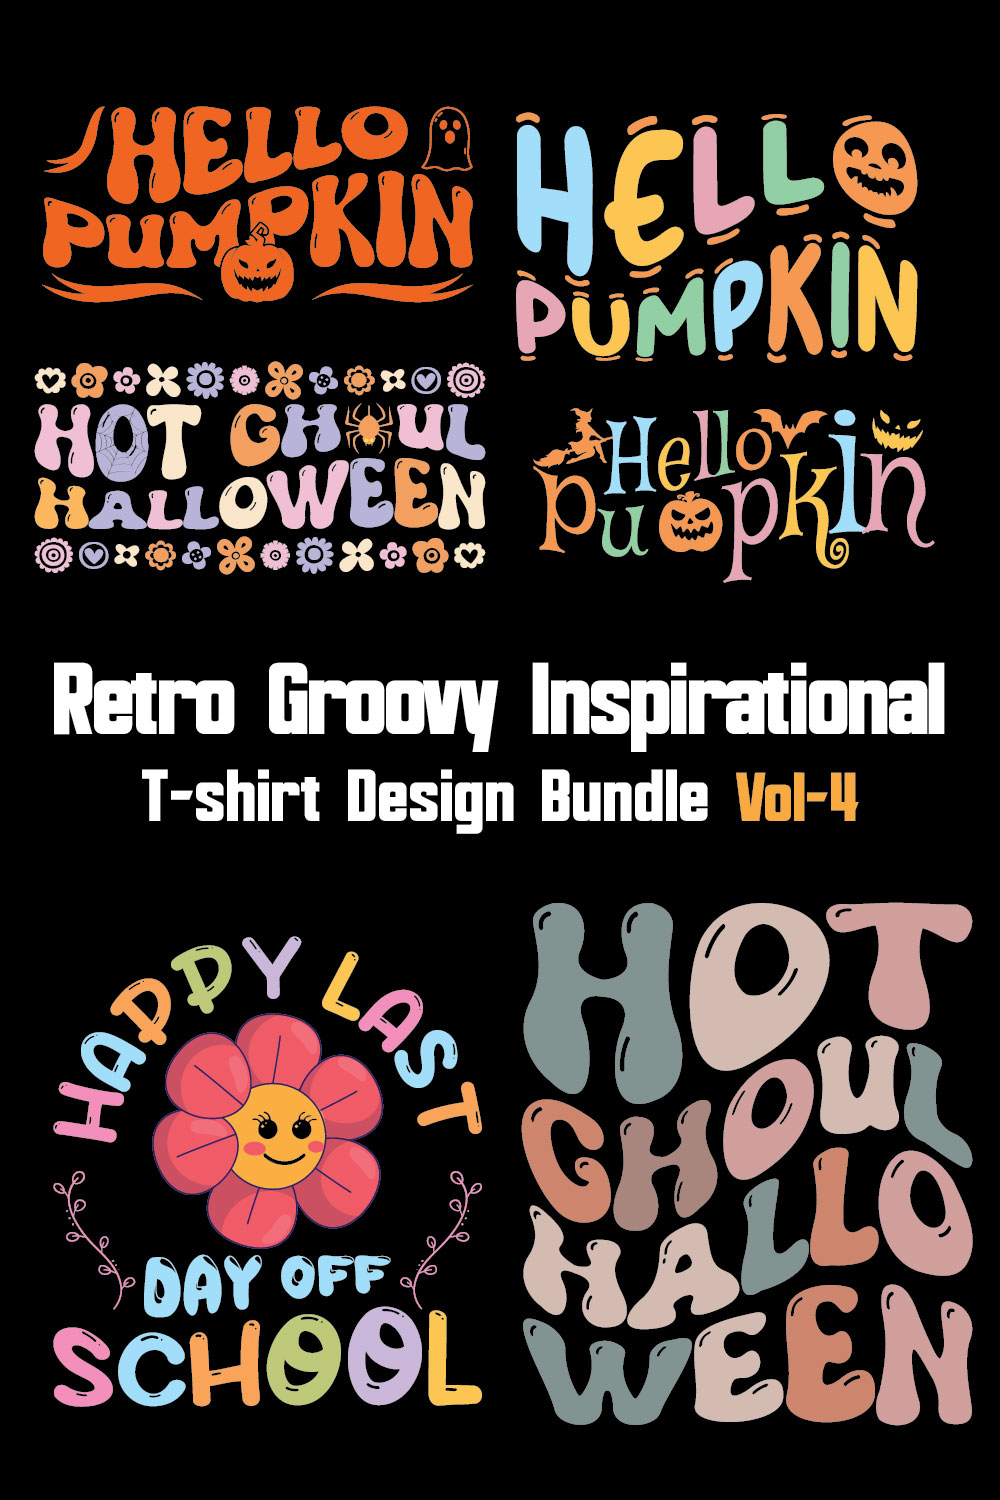 Retro Groovy Inspirational T-shirt Design Bundle Vol-4 pinterest preview image.